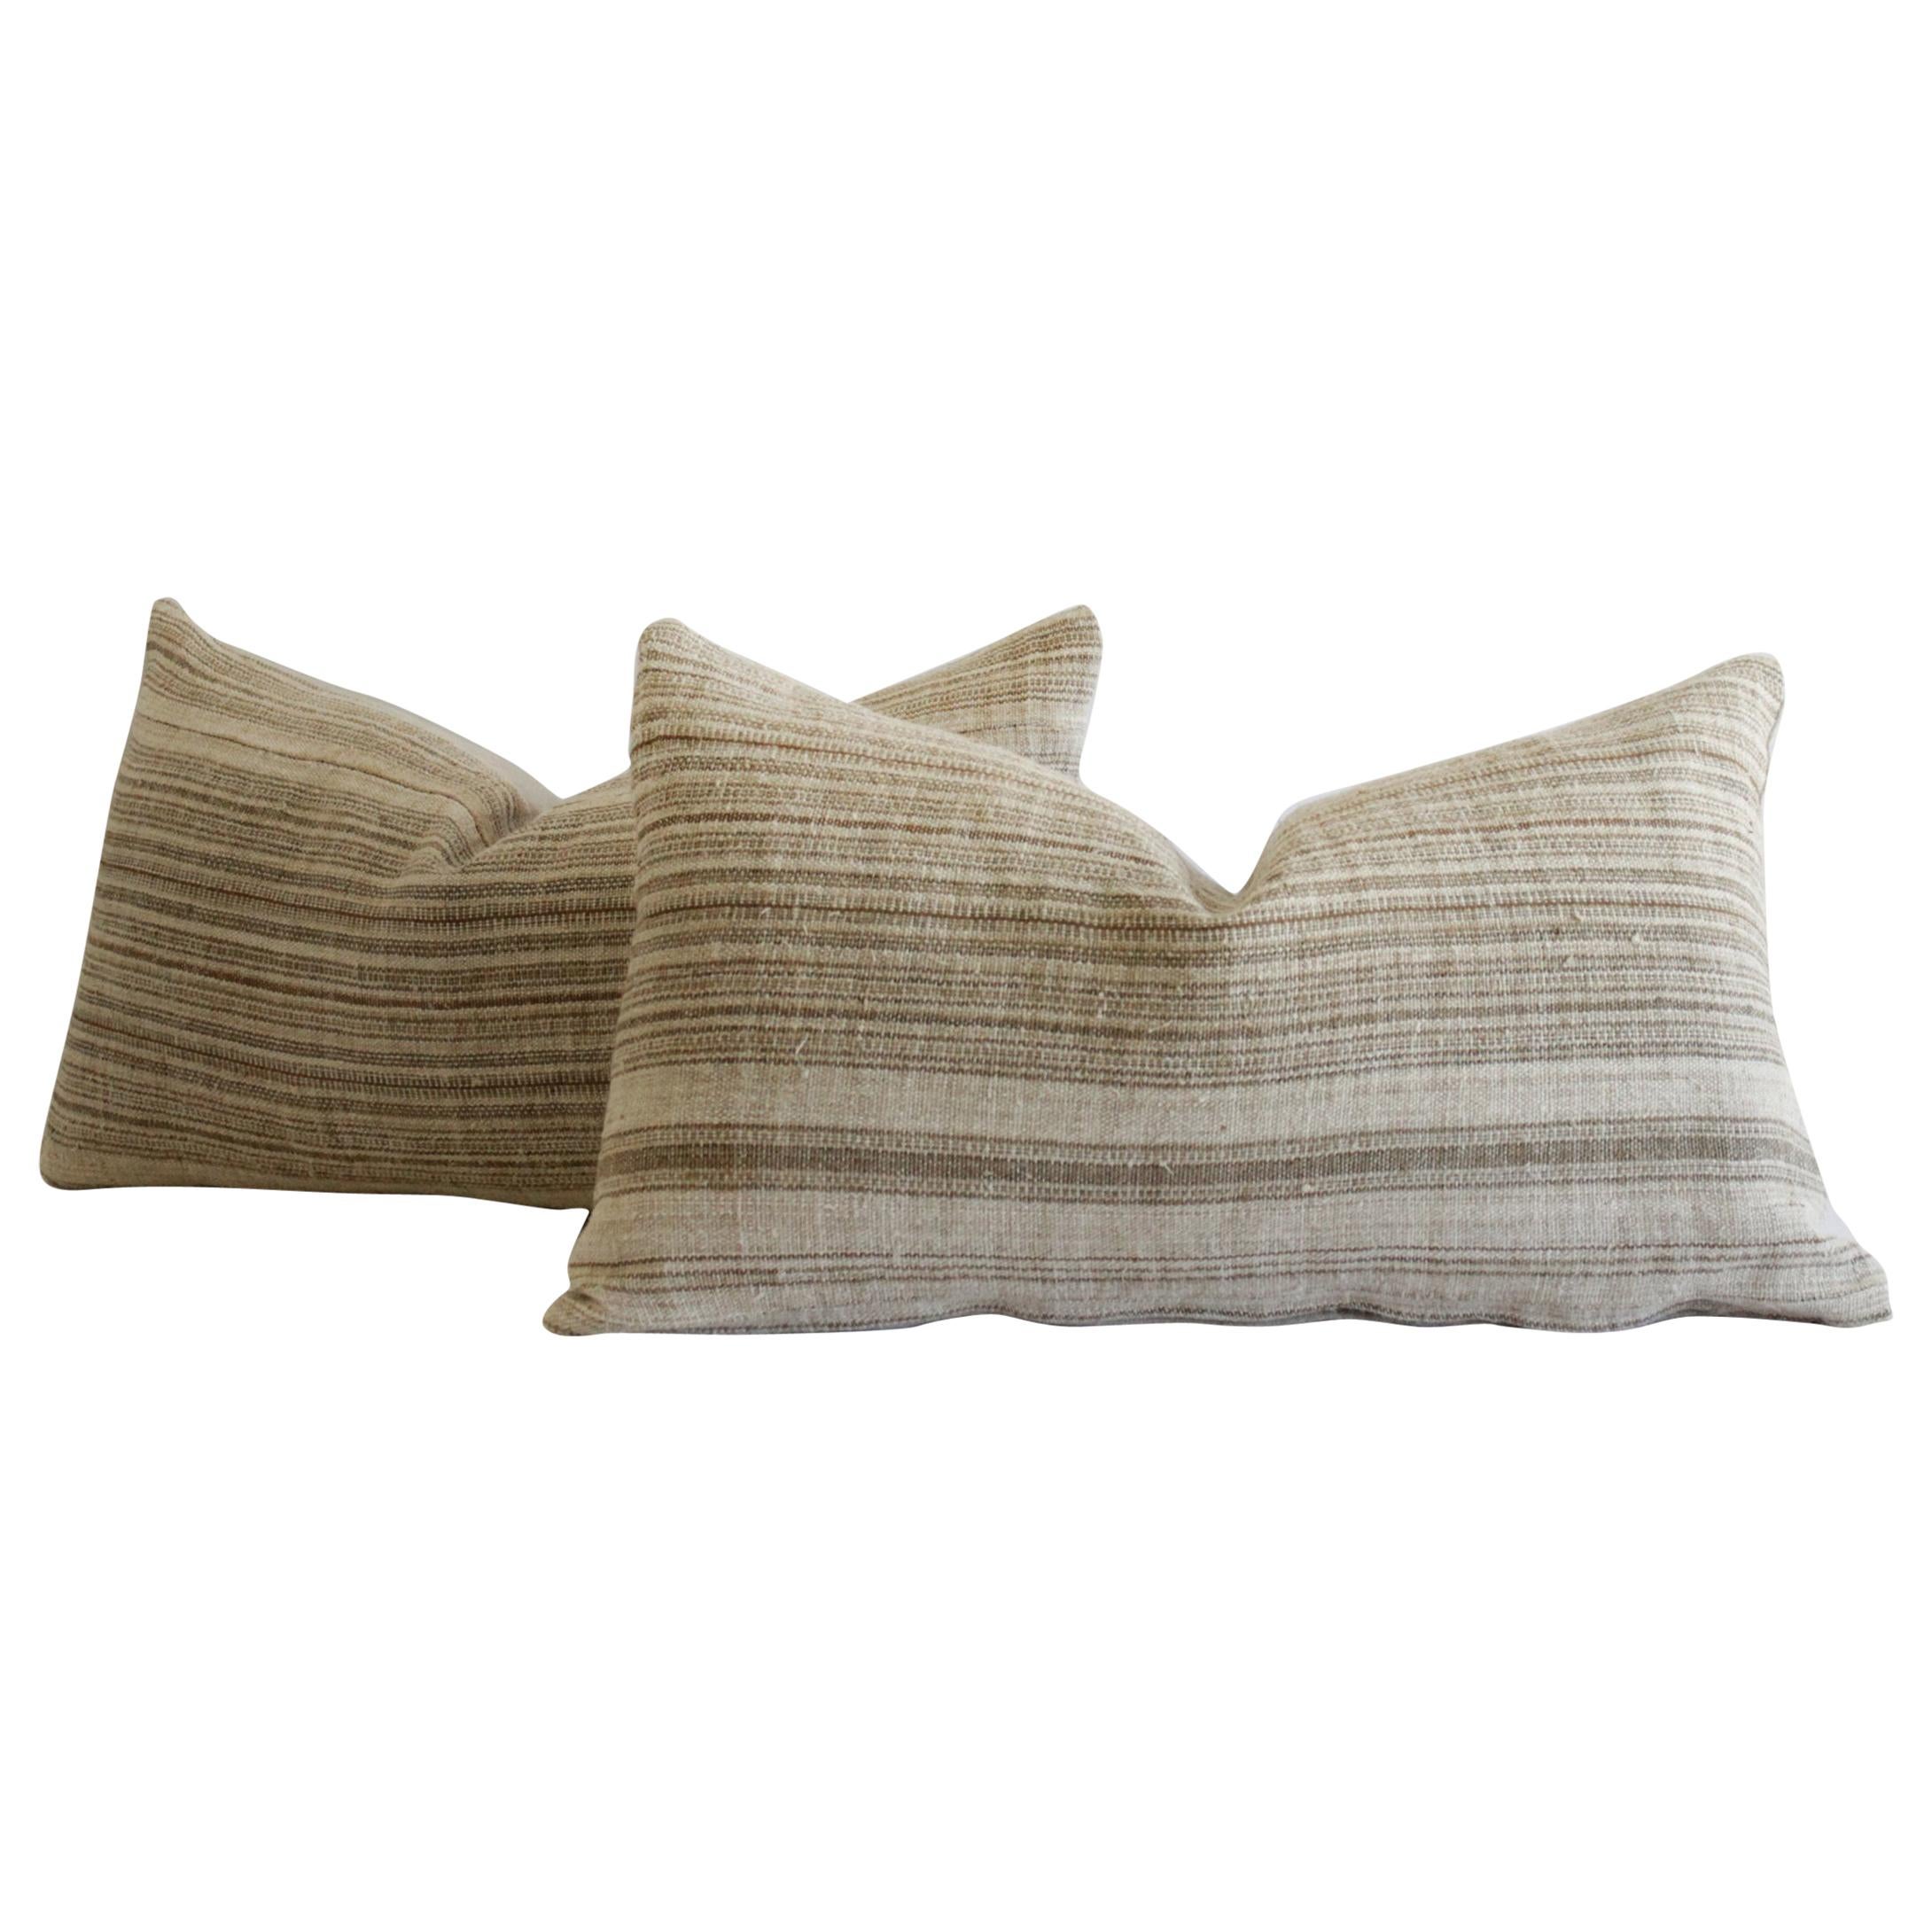 Antique Homespun Linen Pillows in Natural and Brown Stripe